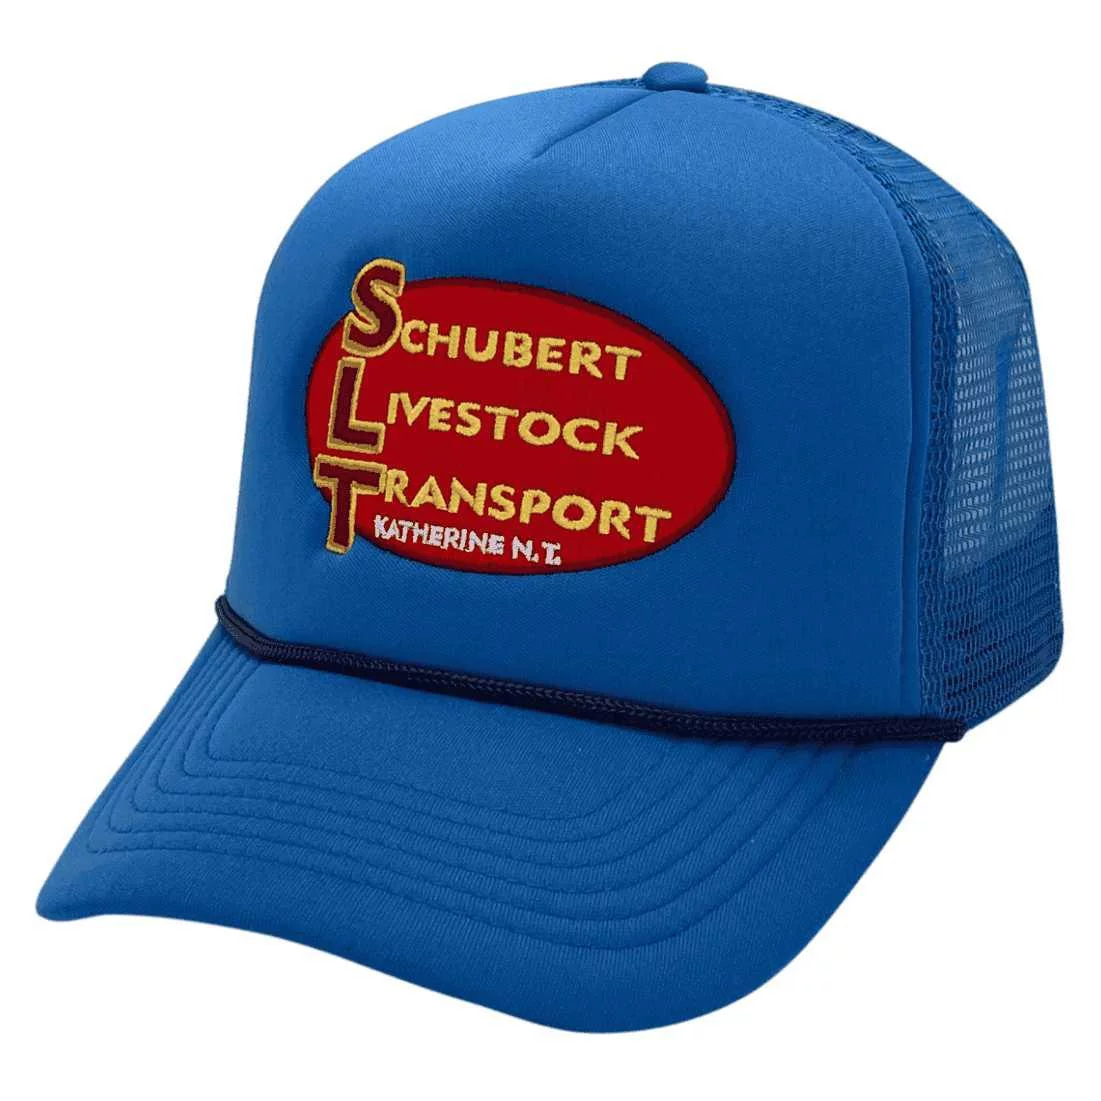 Schubert Livestock Transport Katherine NT HP Original Foamie Aussie Trucker Hat with Australian Head Fit Crown Size and Rope Sash Royal Blue